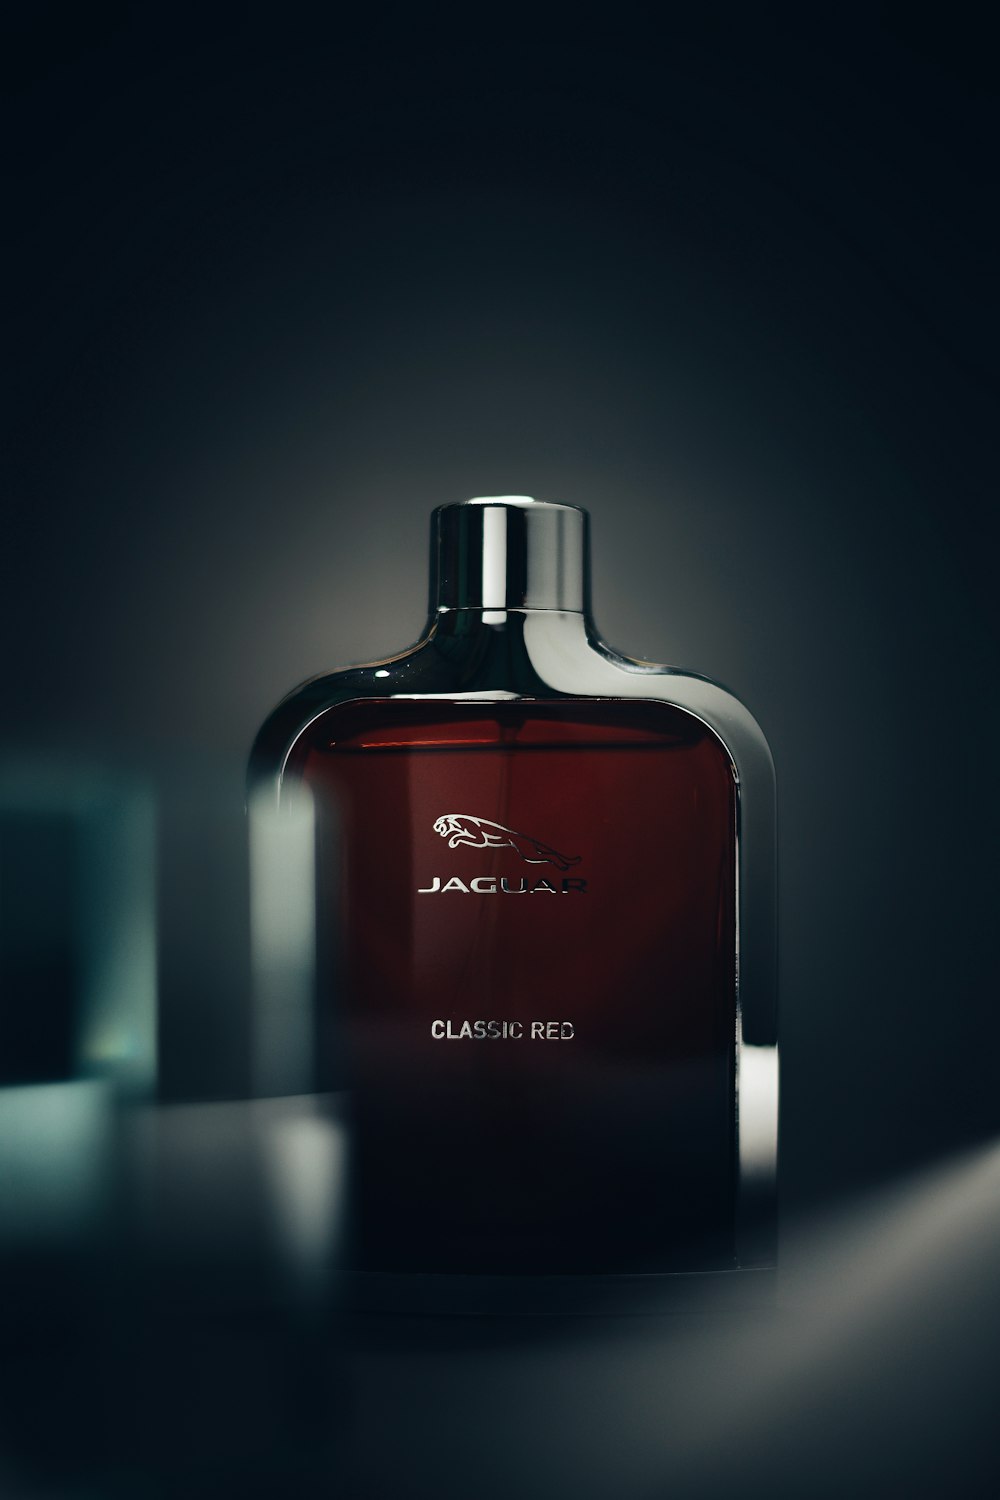 lidelse mekanisk øretelefon Jaguar Classic Red fragrance bottle photo – Free Style Image on Unsplash